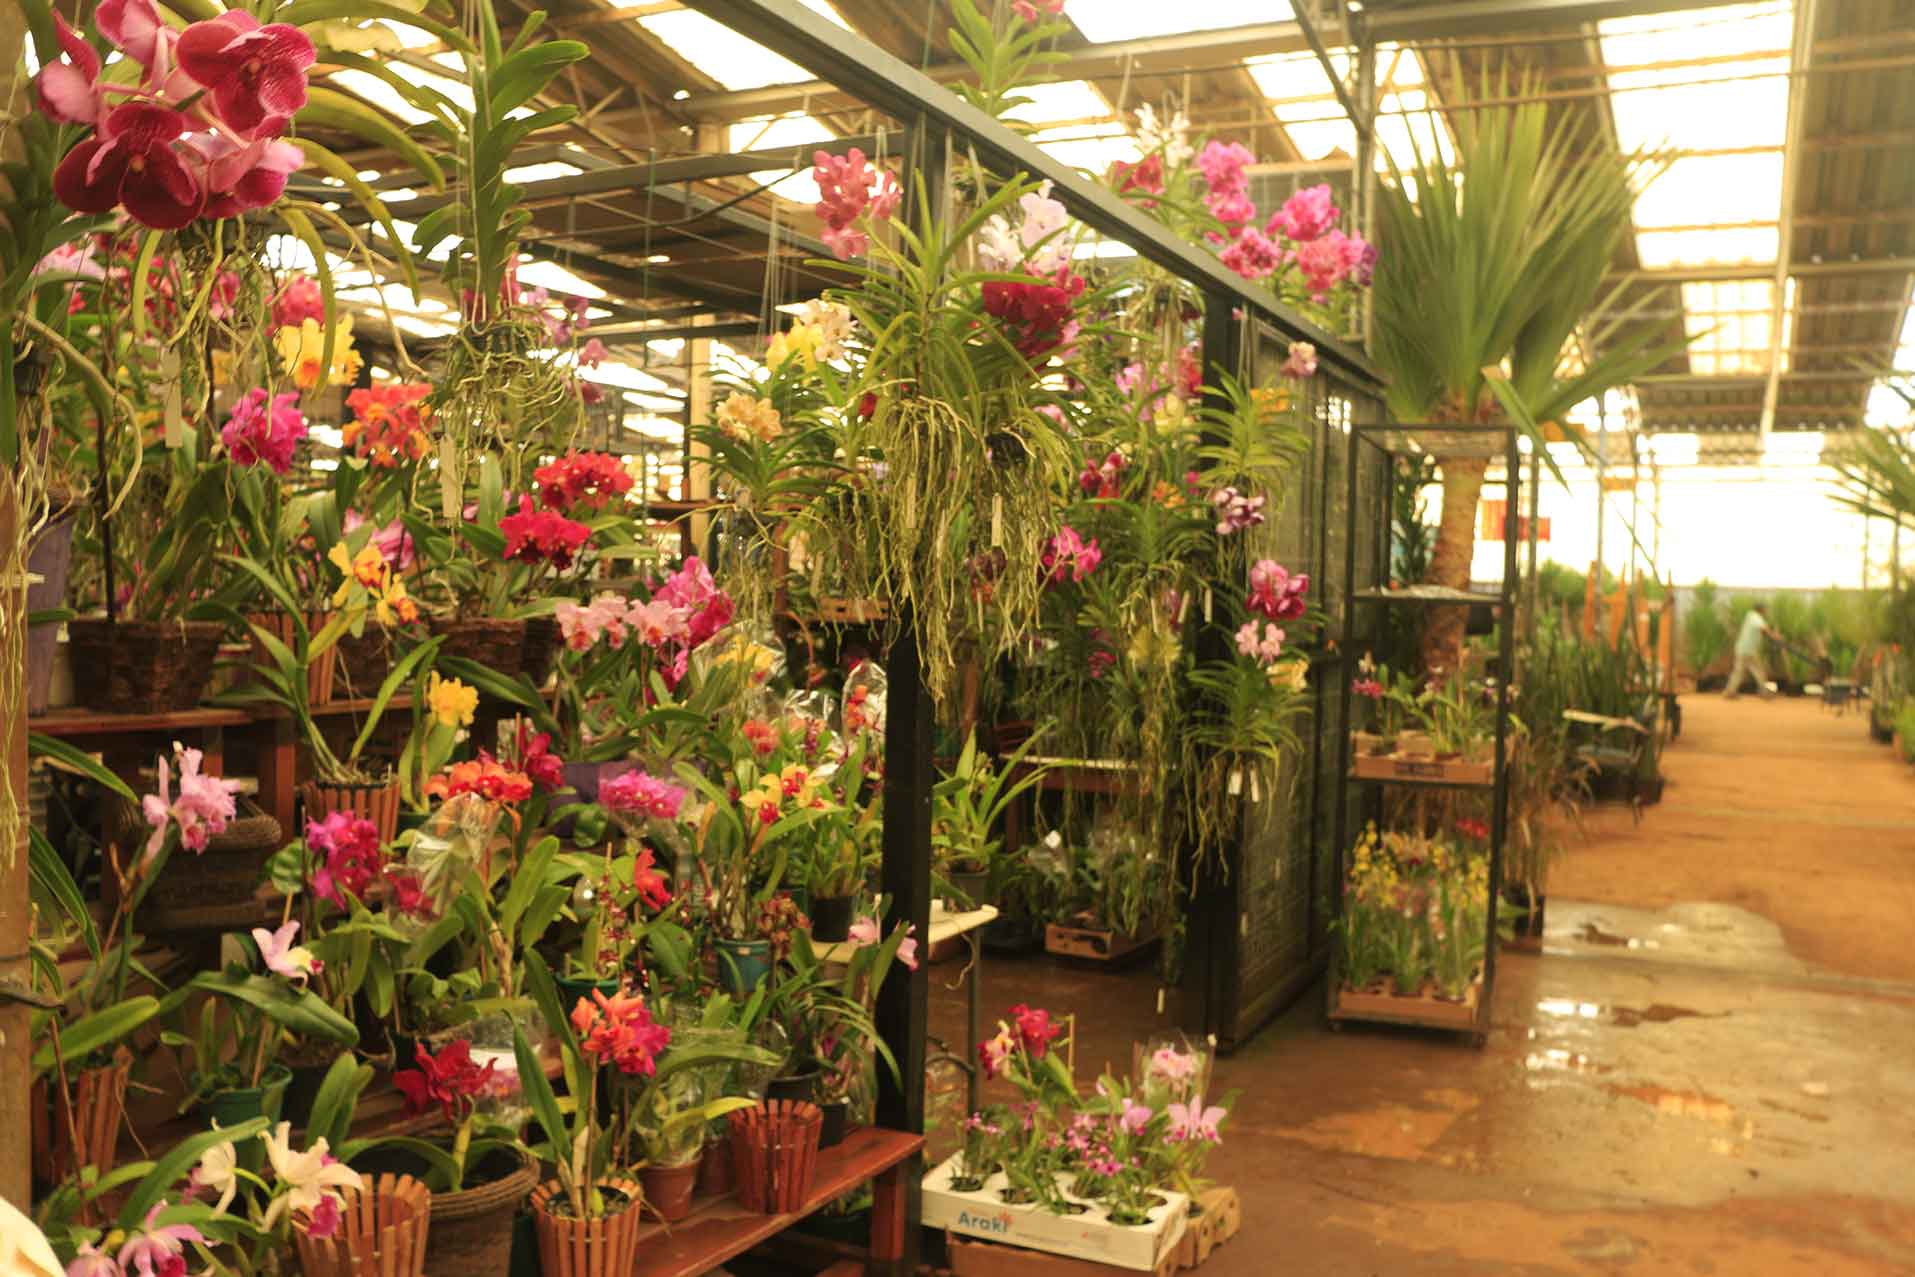 O Mercado de Flores – Ceasa Campinas: flores e plantas ornamentais